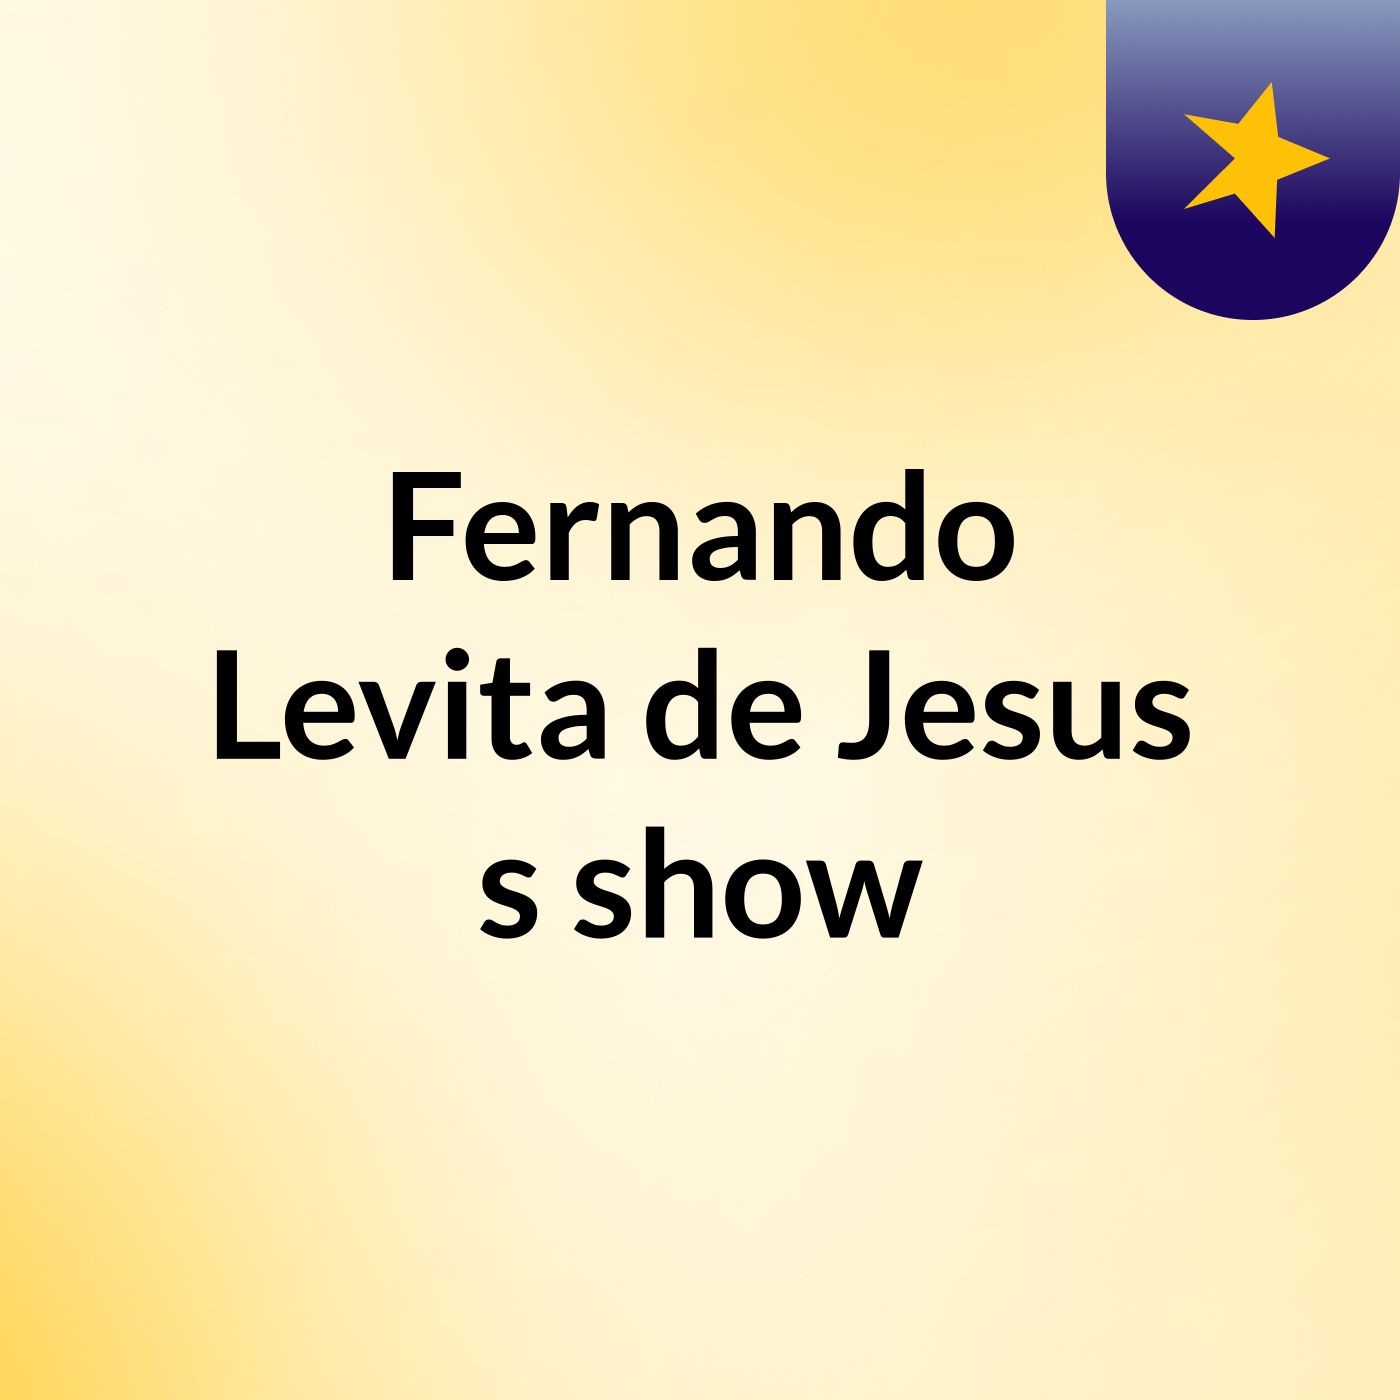 Fernando Levita de Jesus's show